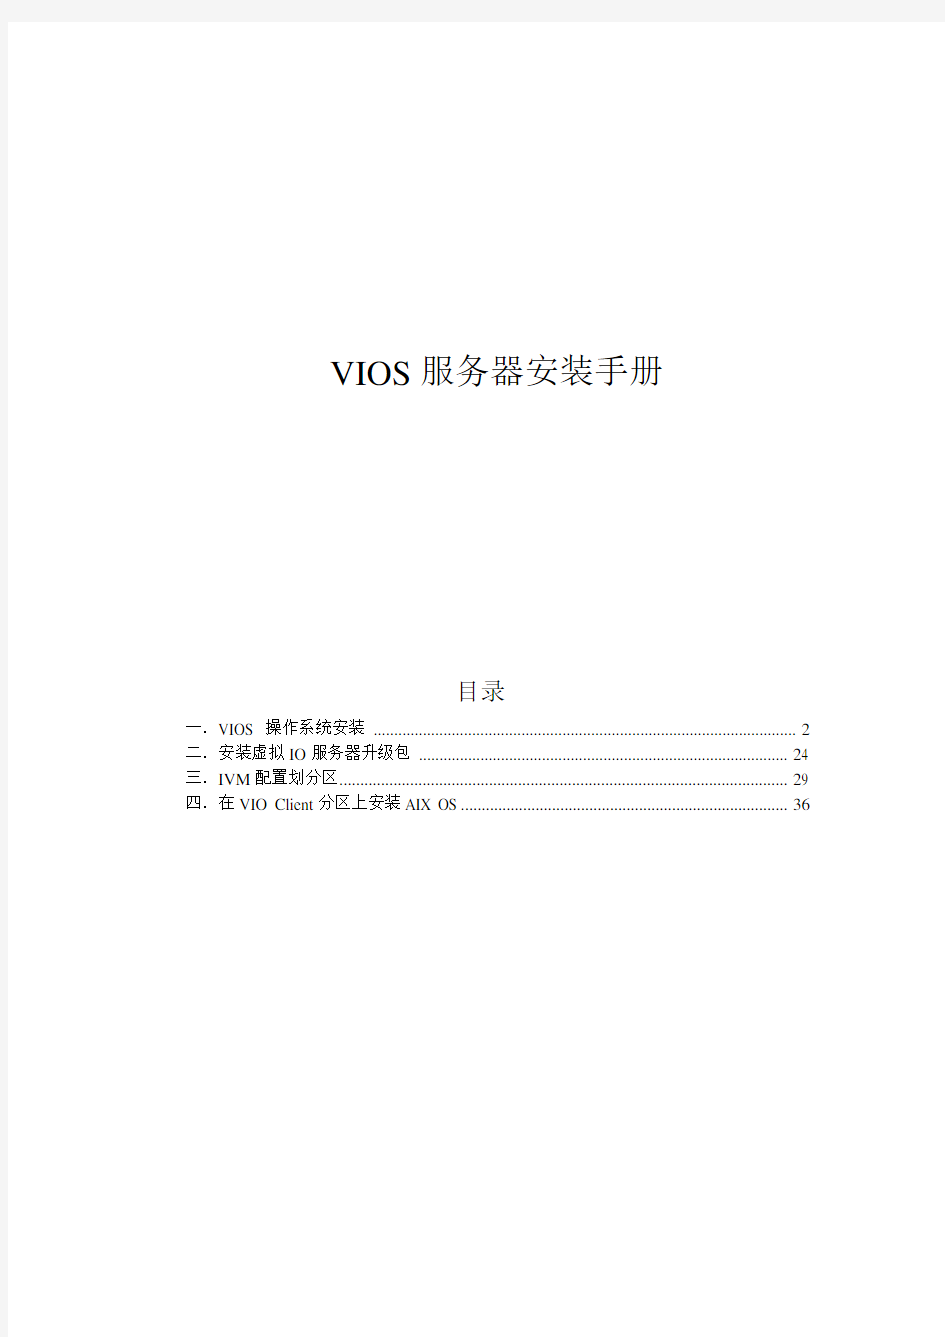 VIOS-VIOC-安装手册_IVM_V2.0